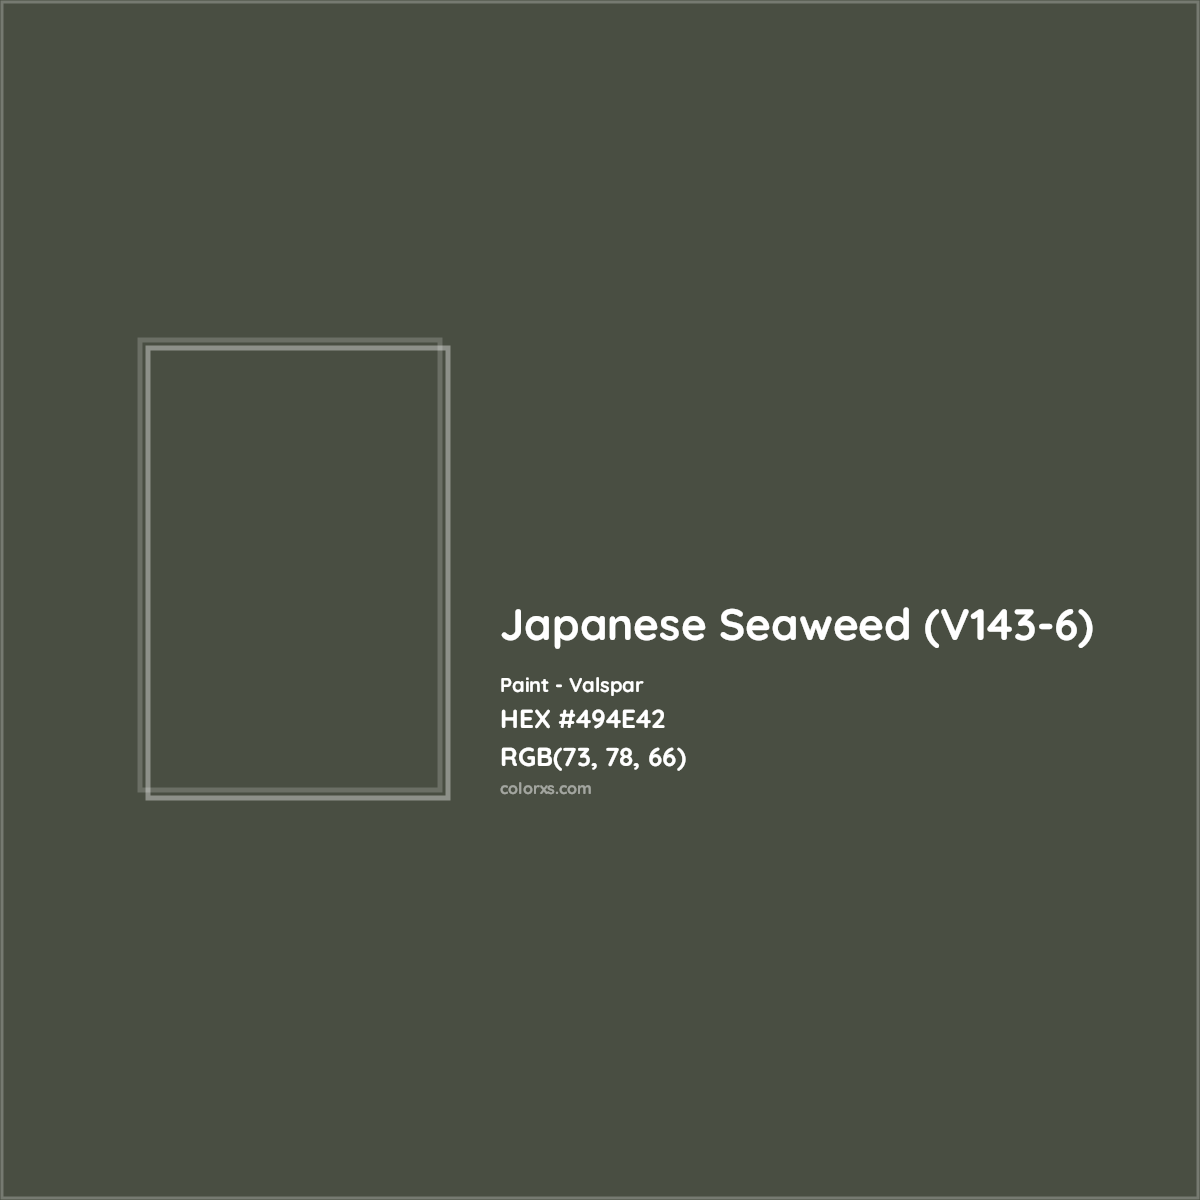 HEX #494E42 Japanese Seaweed (V143-6) Paint Valspar - Color Code